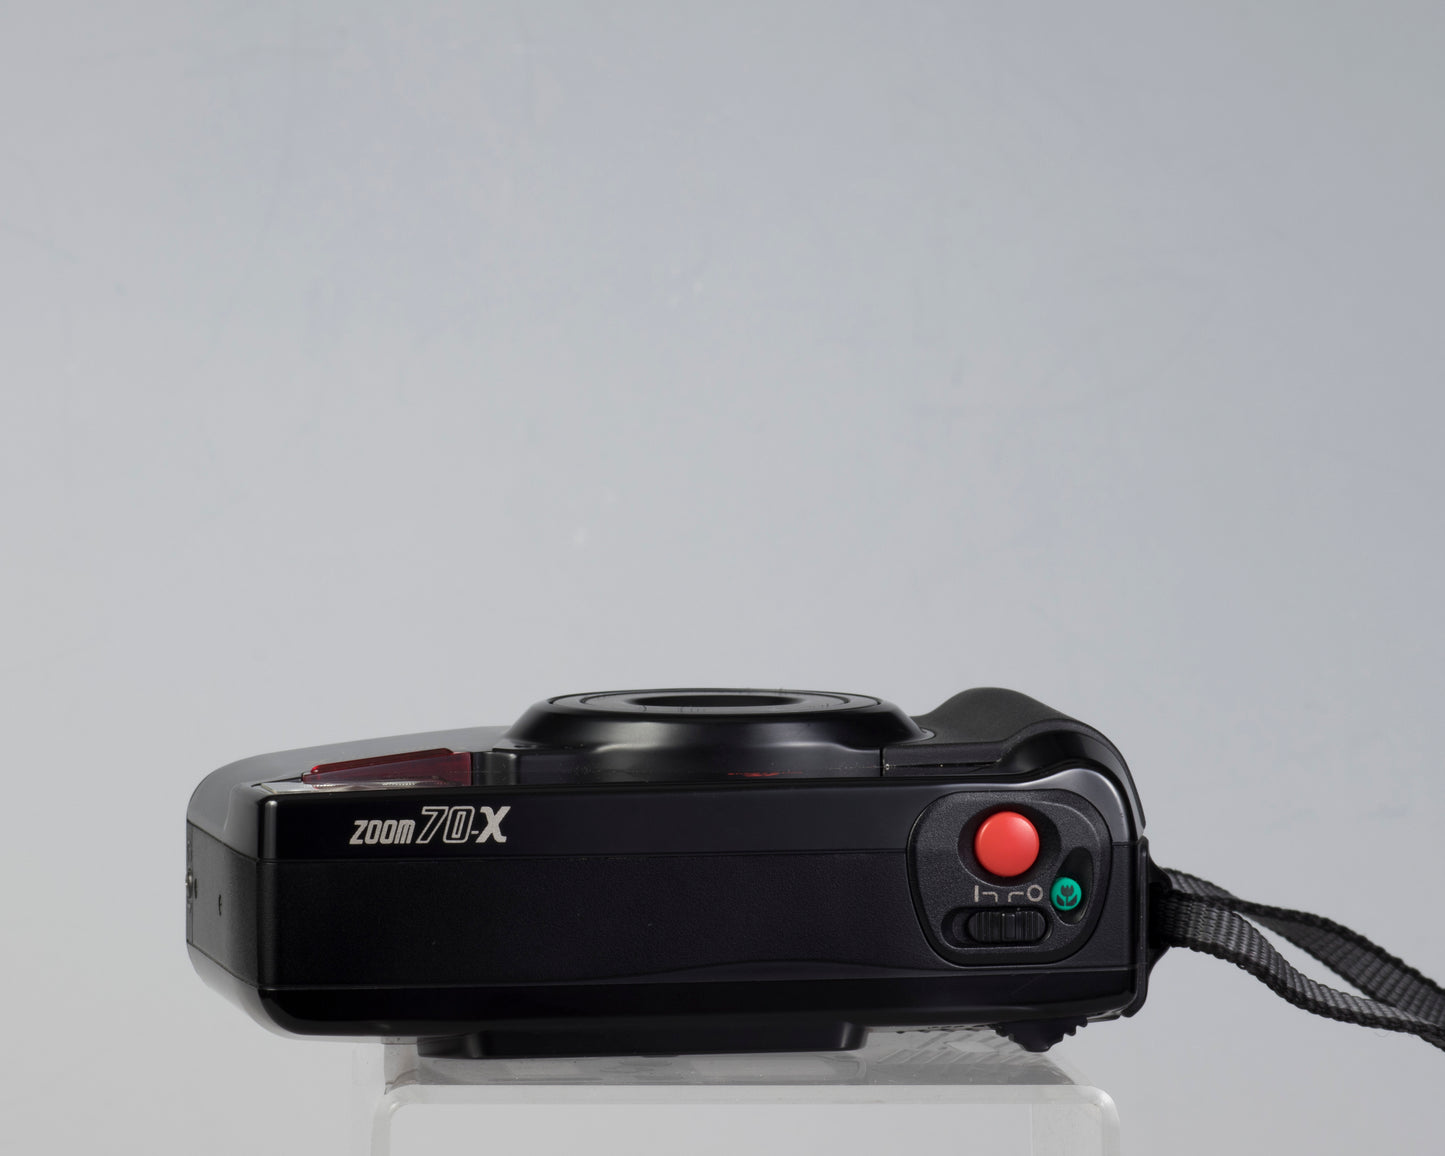 Pentax Zoom 70-X 35mm camera w/case (serial 8033387)